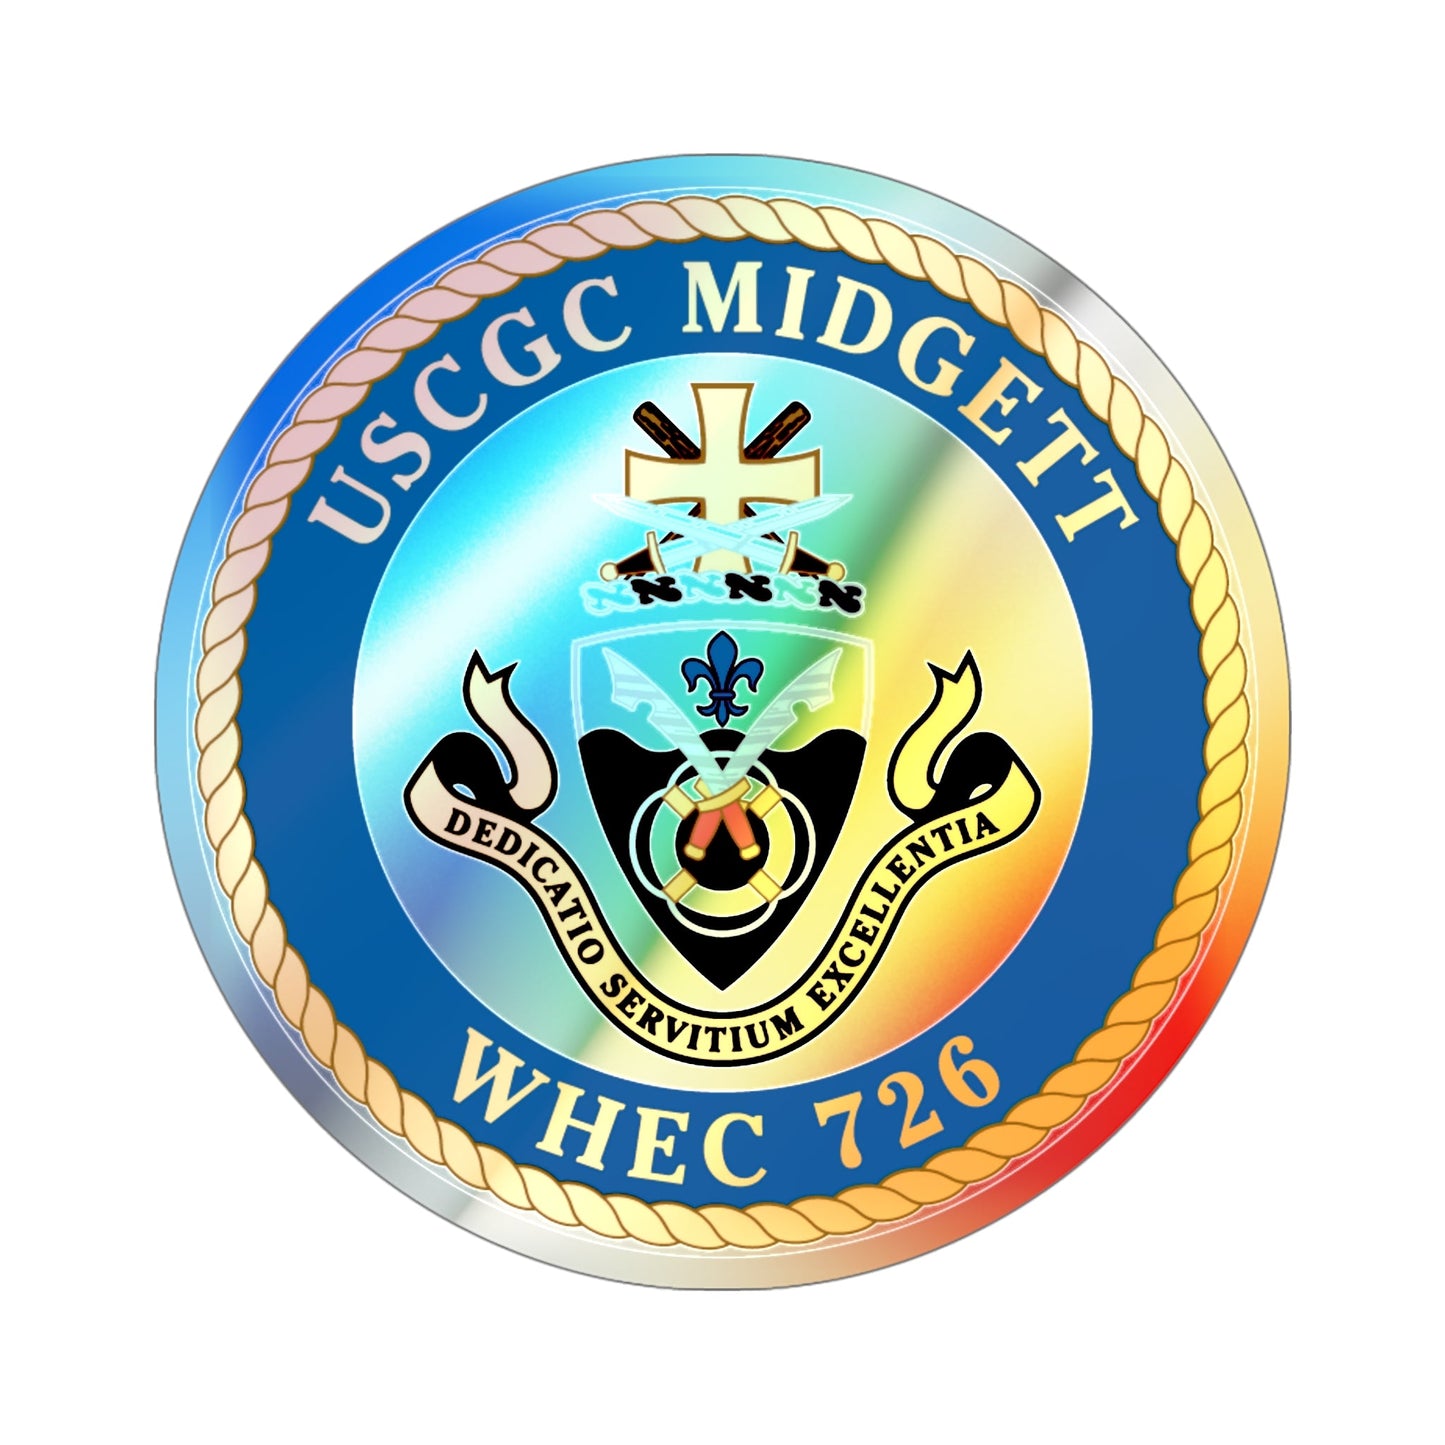 USCG Midgett WHEC 726 (U.S. Coast Guard) Holographic STICKER Die-Cut Vinyl Decal-5 Inch-The Sticker Space